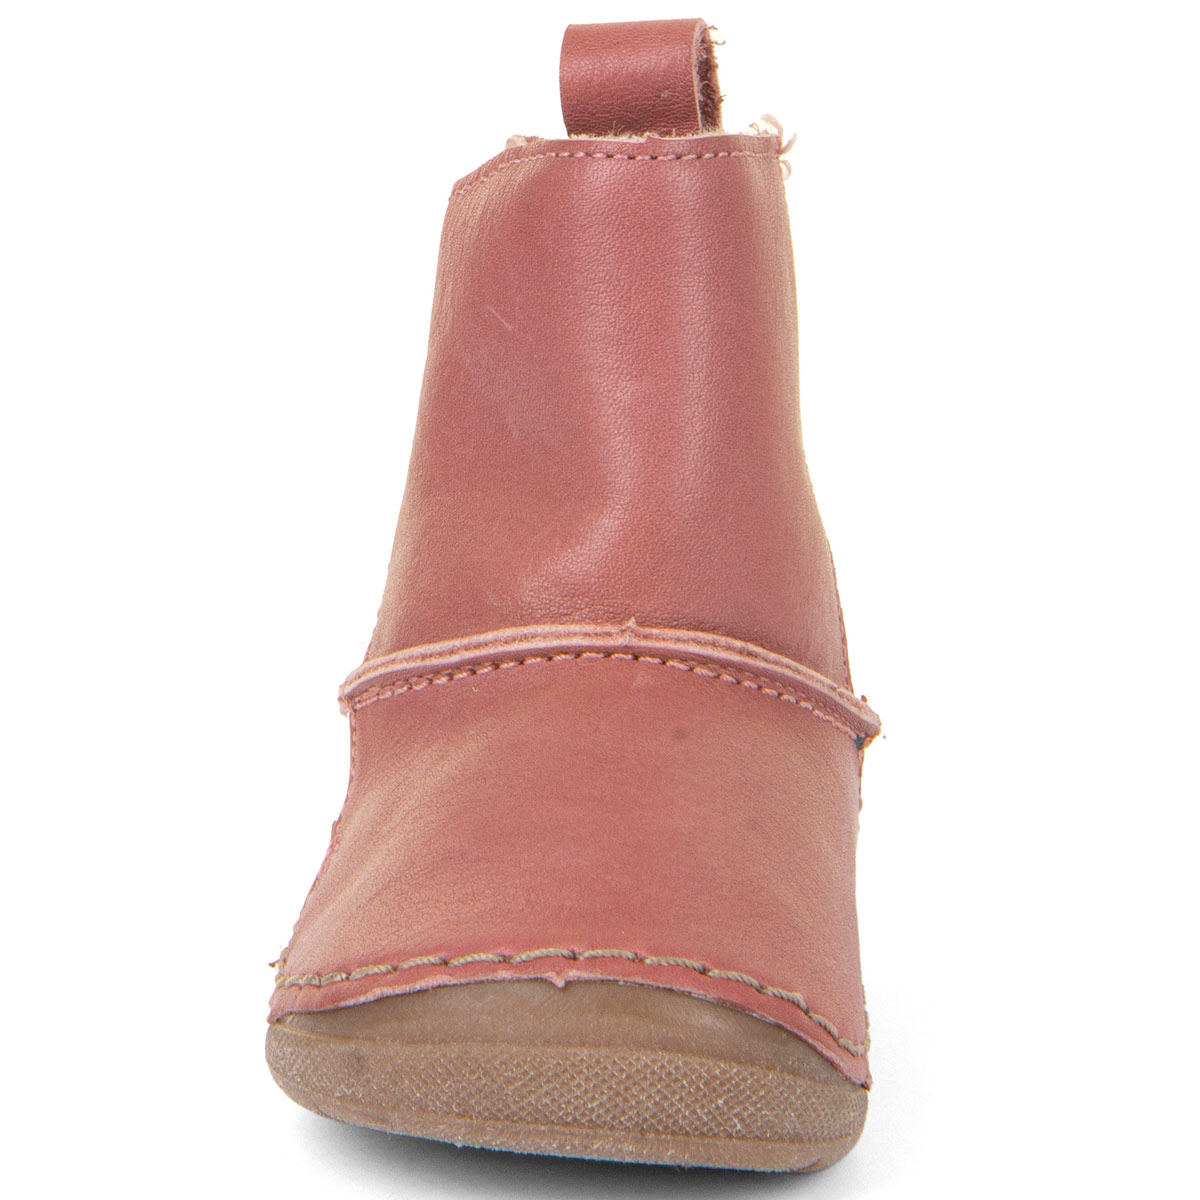 Paix-Winter Boots Lammfell dark pink